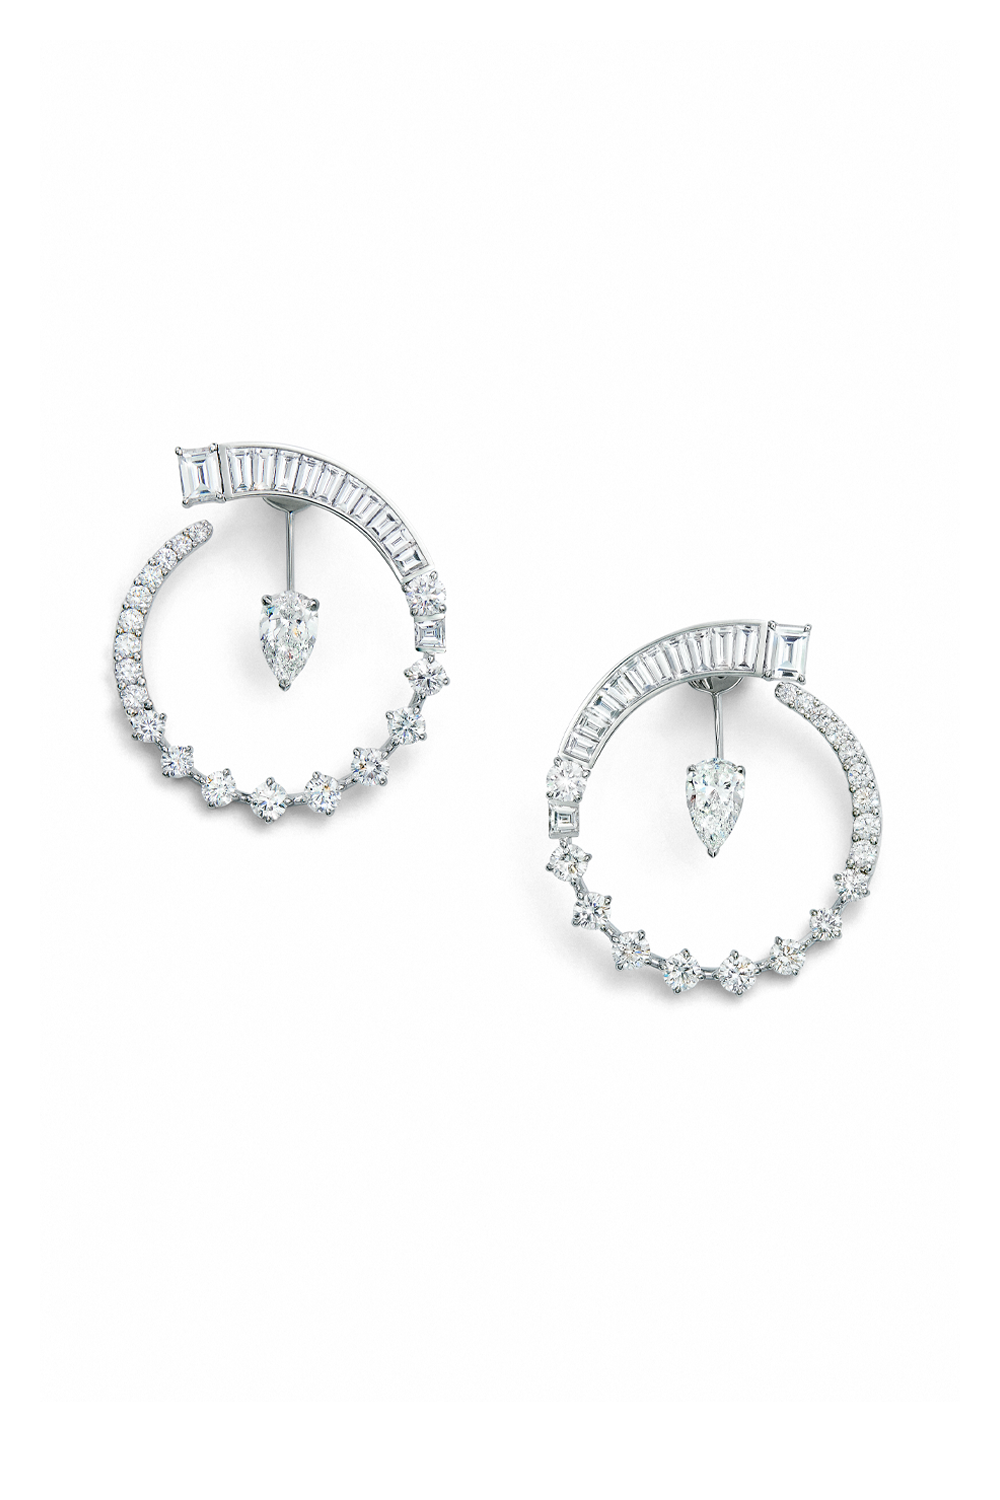 Regard Jewelry - Rare Diamond Slice Earrings Regard Jewelry